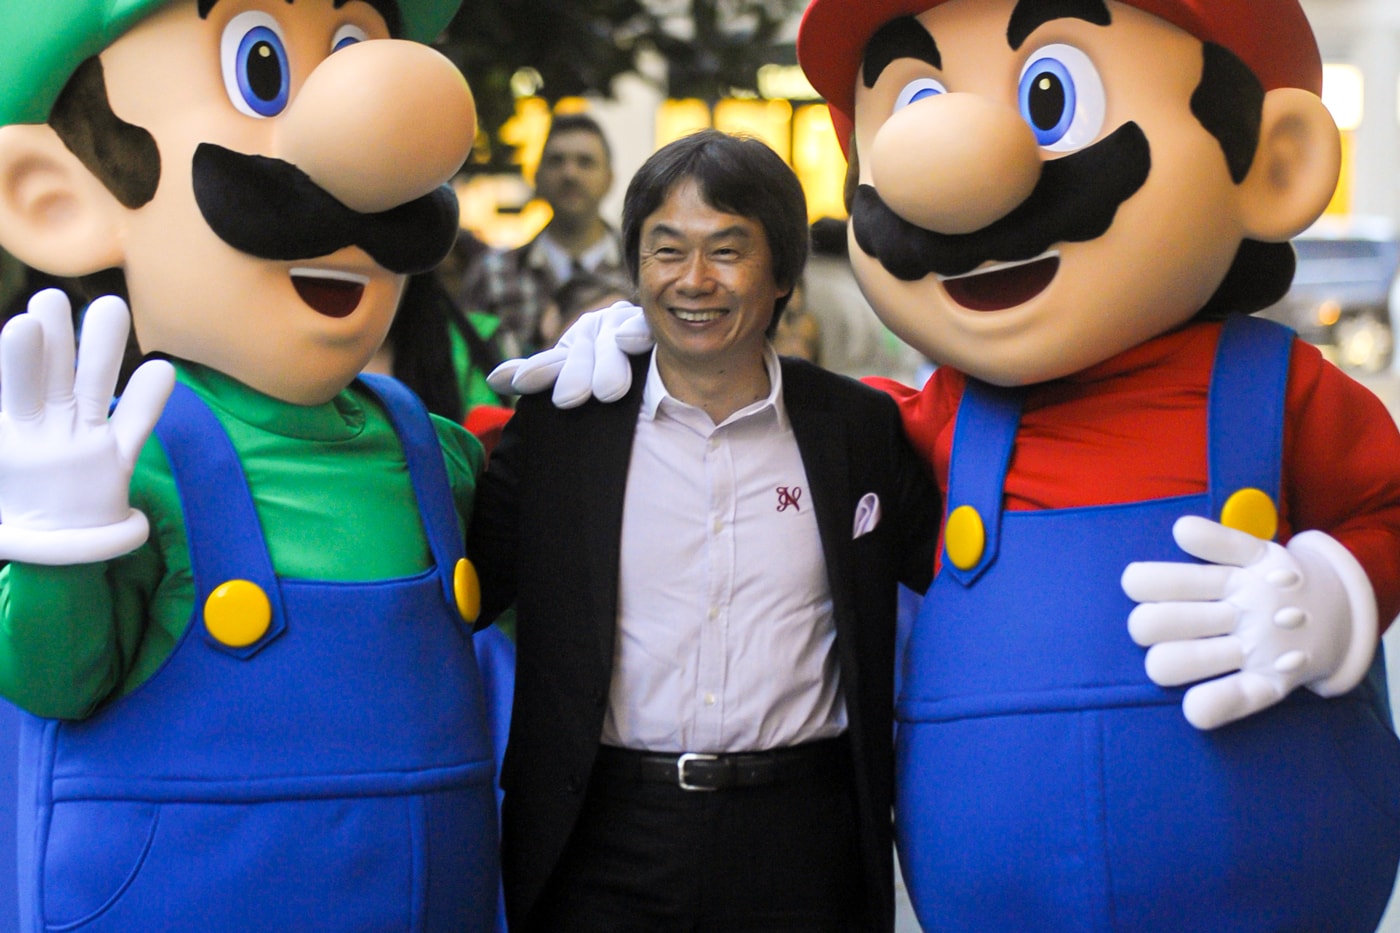 Super Mario Bros Creator Shigeru Miyamoto Receives Japanese Cultural Award honor video games nintendo the legend of zelda starfox donkey kong gaming 70s